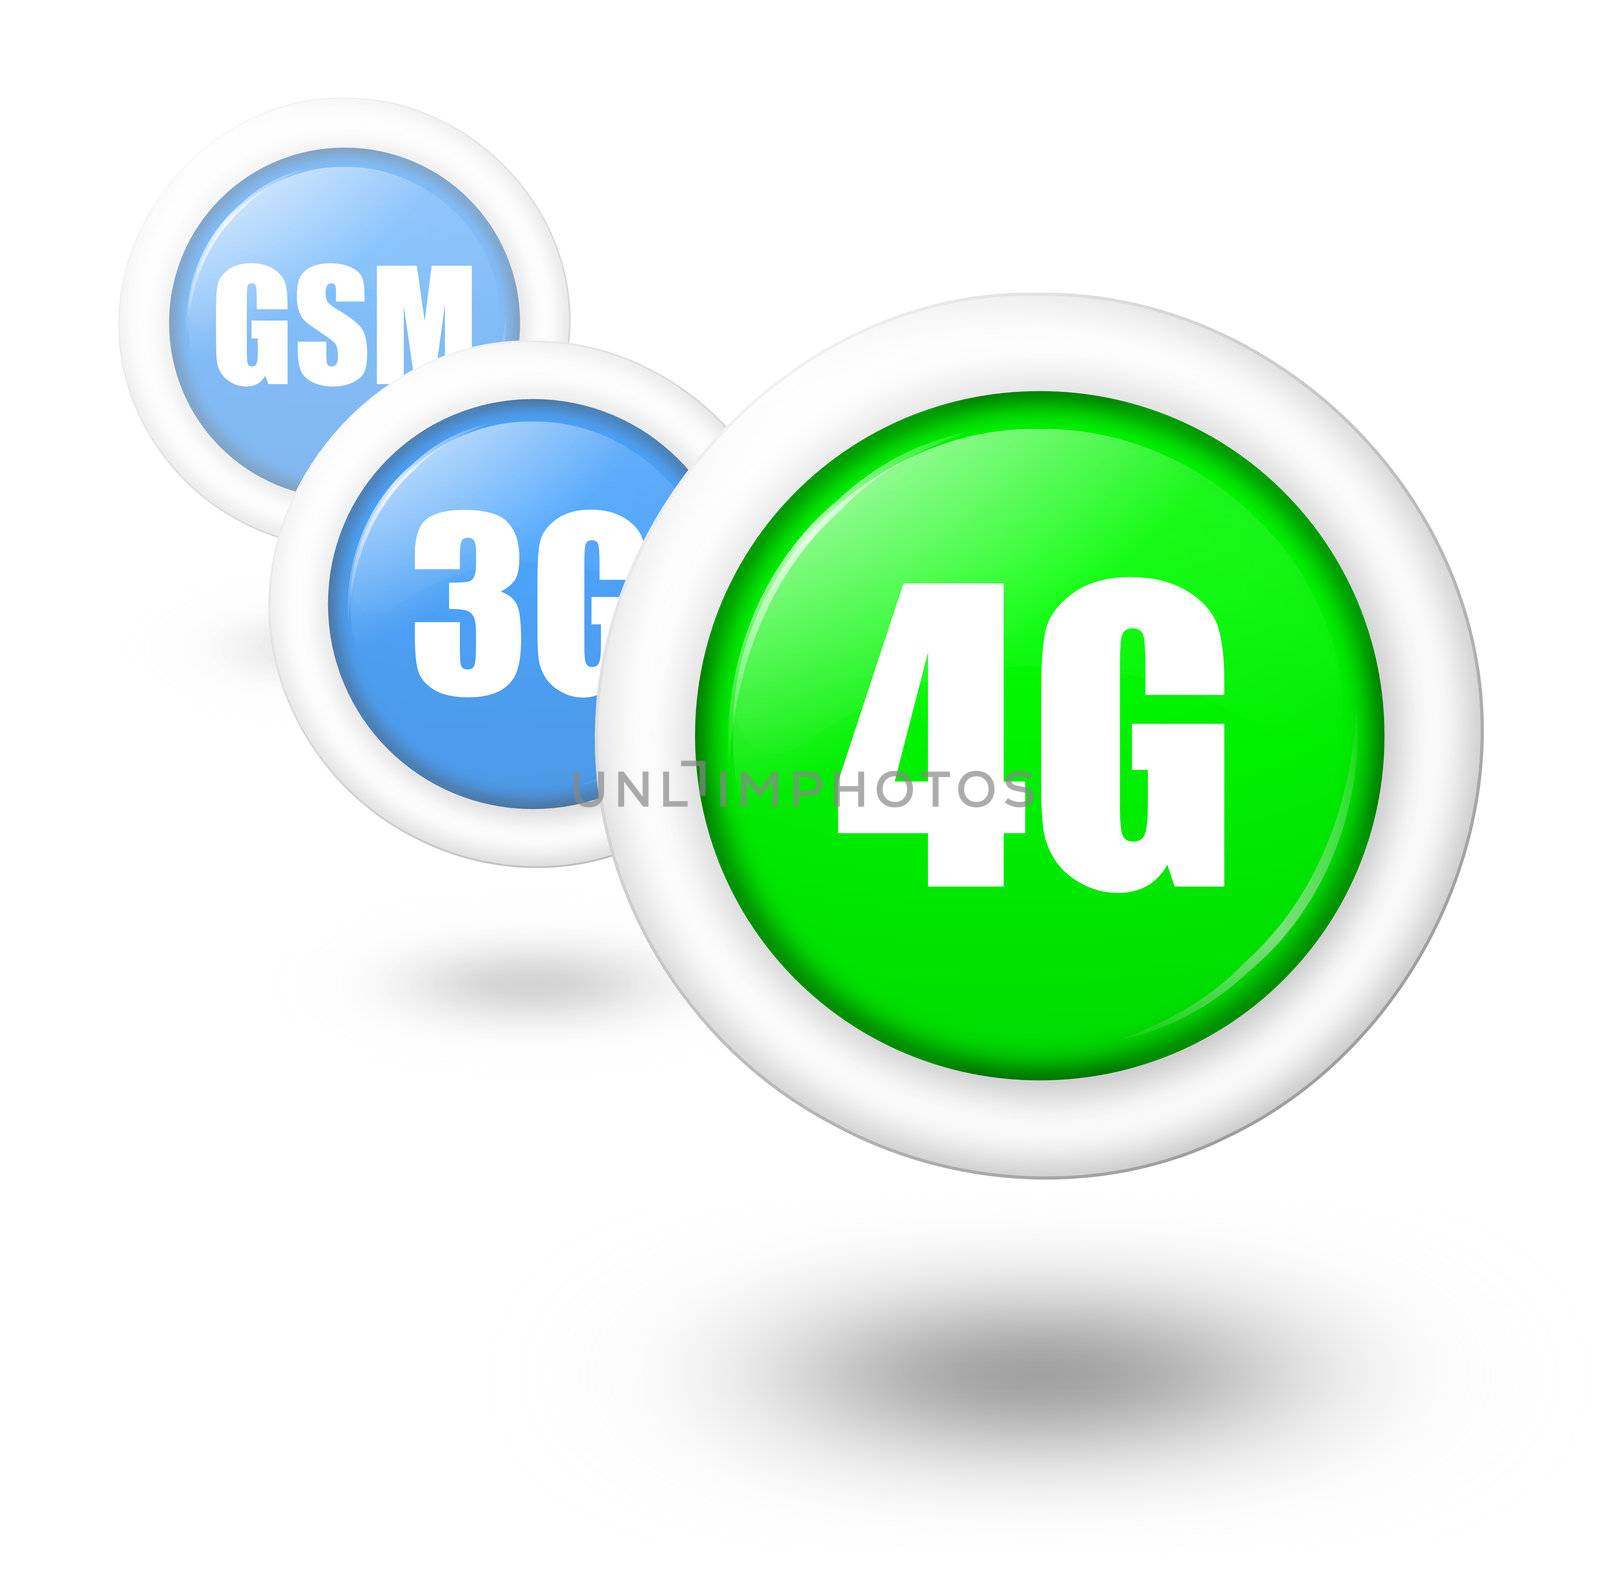 4G, 3G and GSM symbol representing telecommunication progress concept illustration